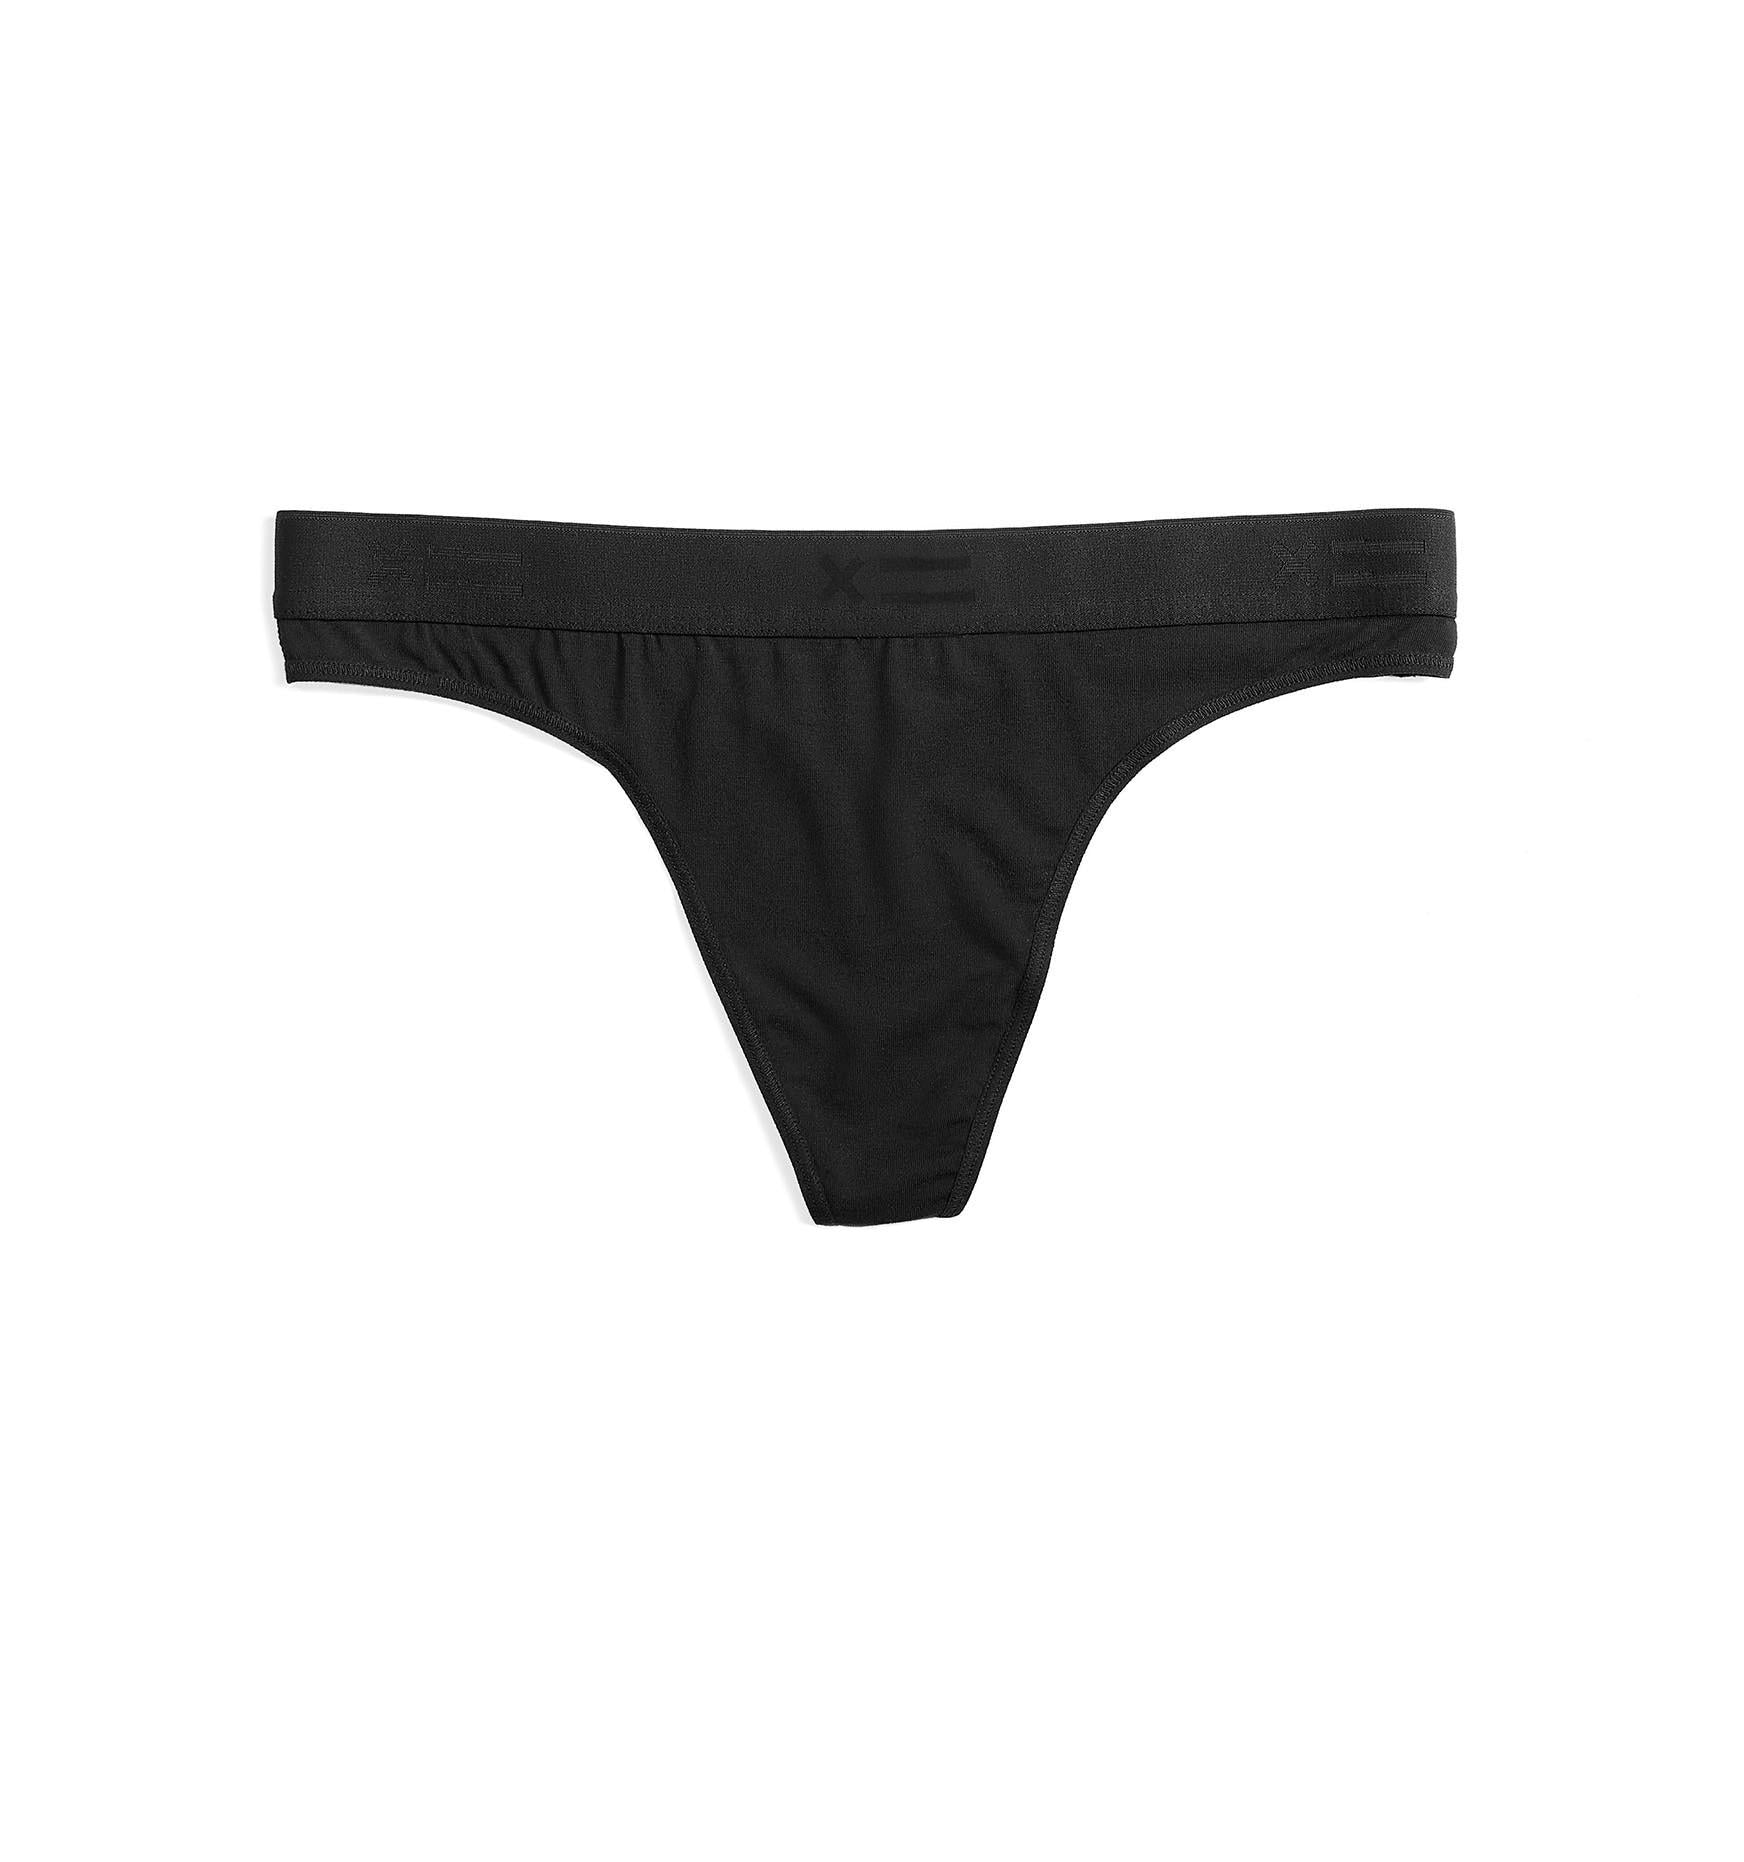 Kj888 Women Modal Underwear Knickers High Waist Bow Briefs For